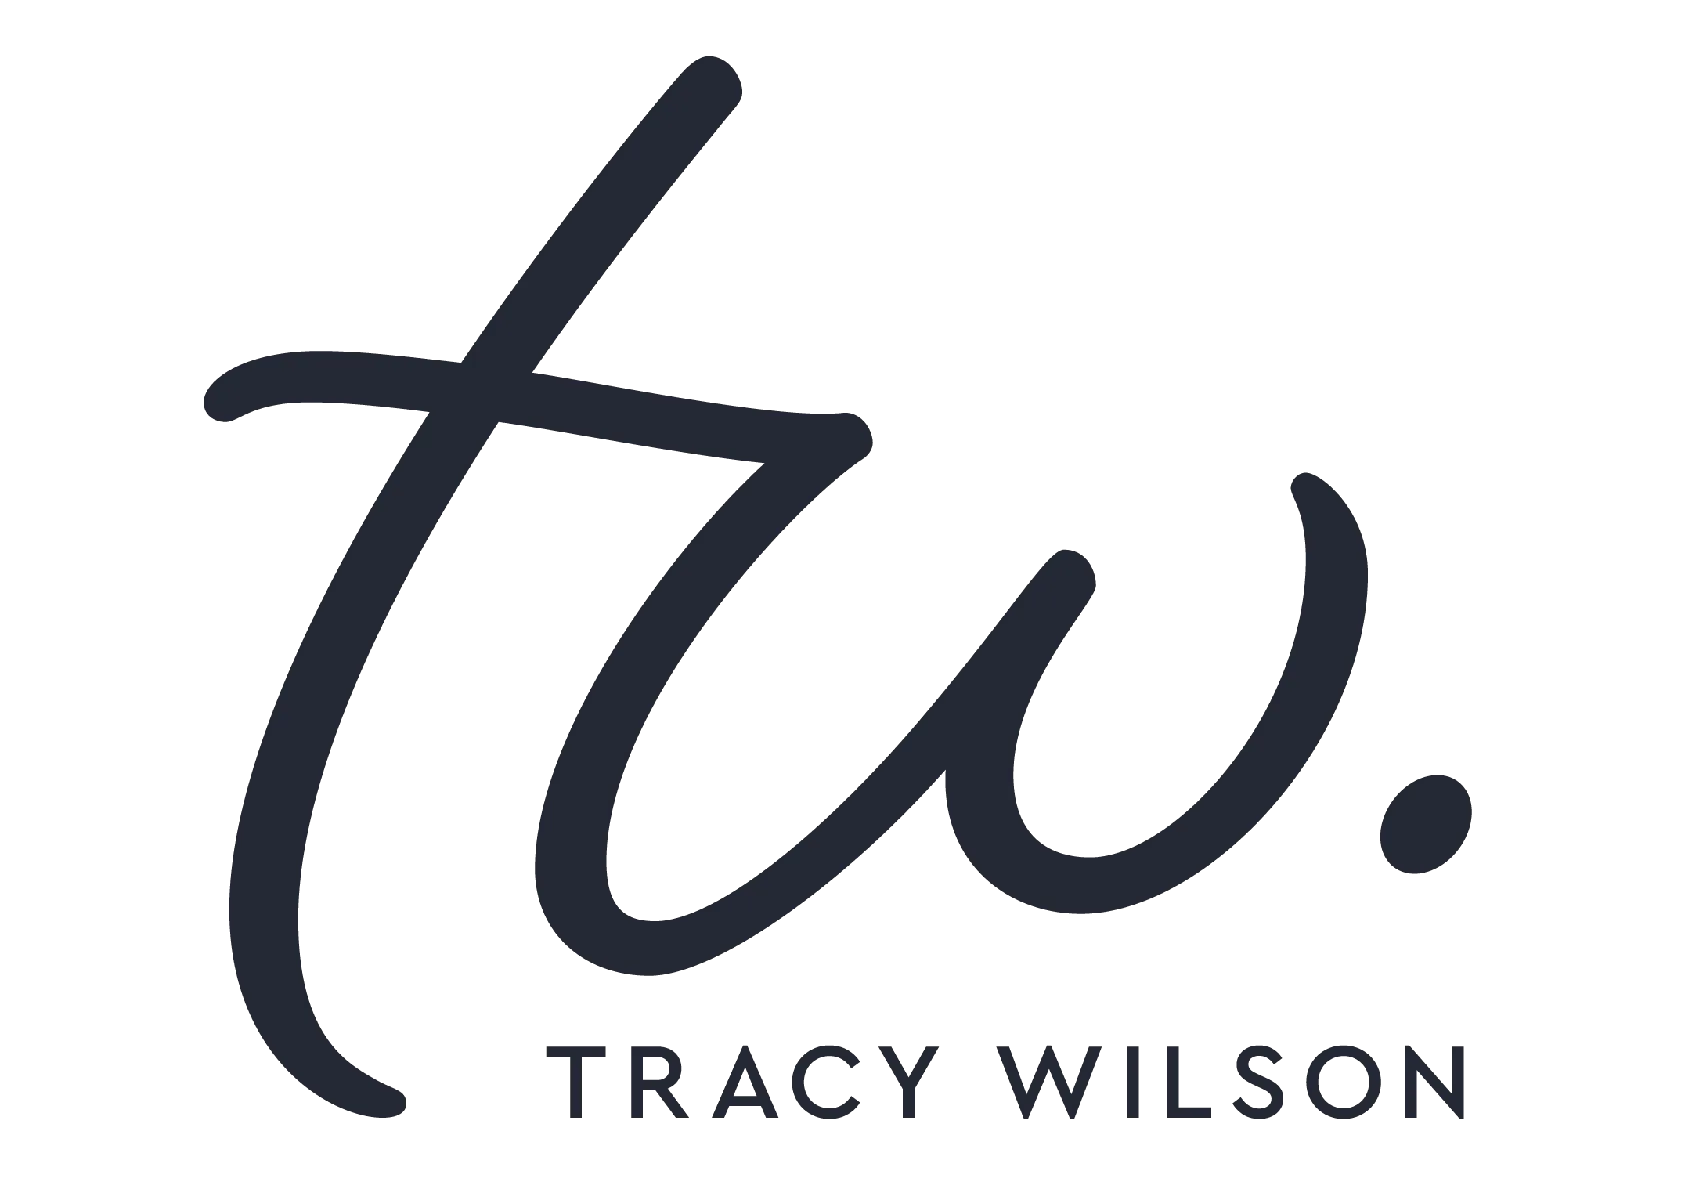 TracyMWilson